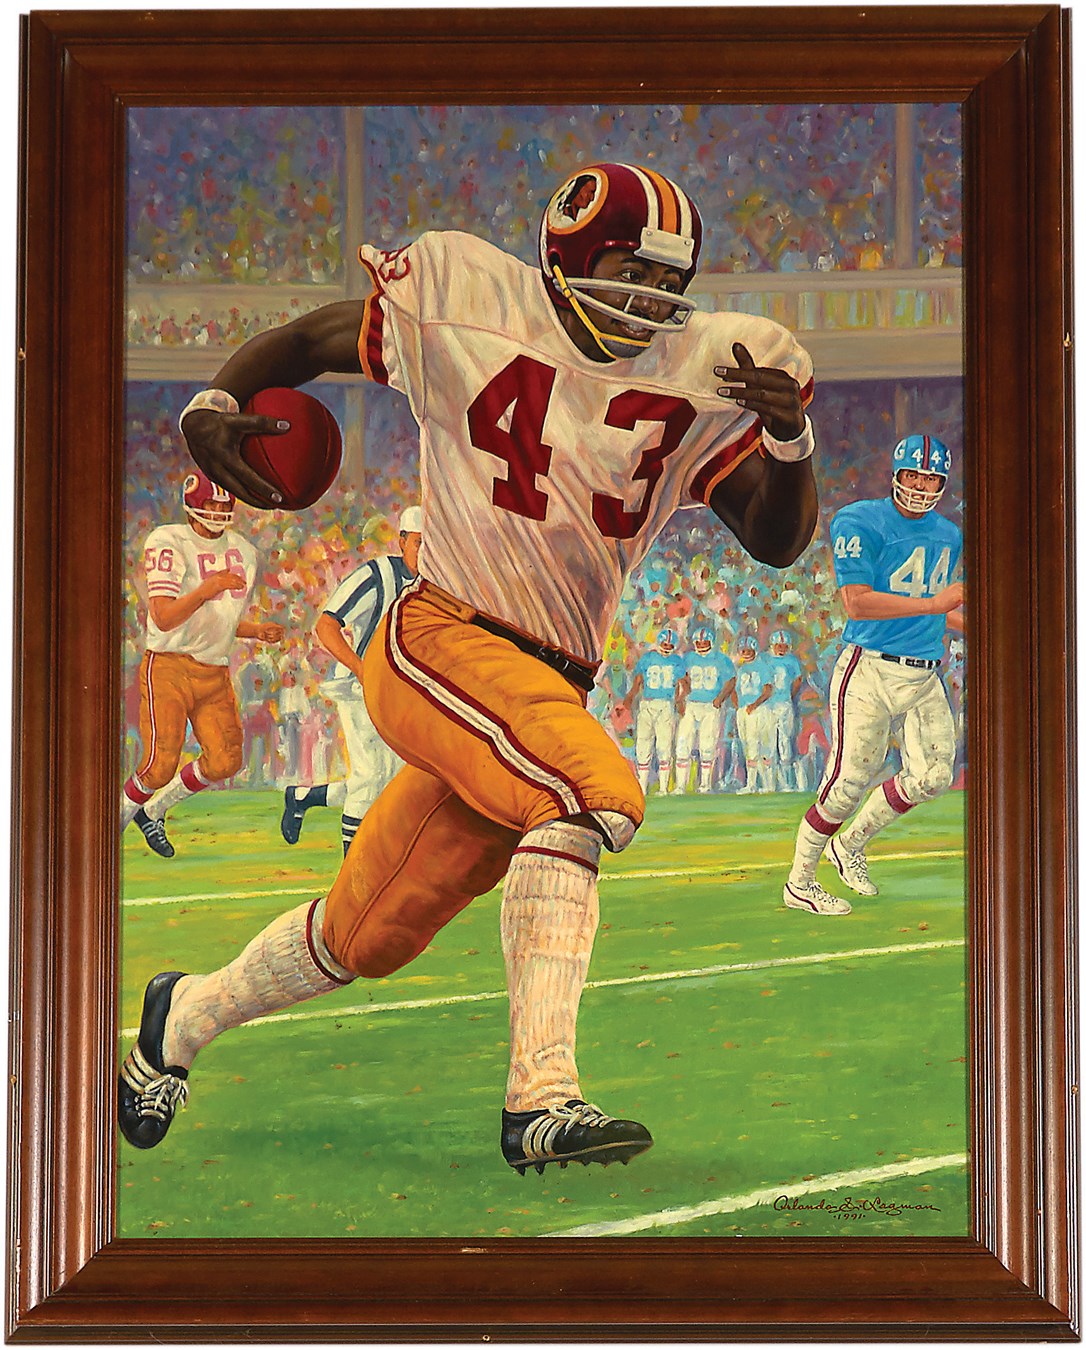 - Larry Brown Washington Redskins Football Painting by Orlando S. Lagman, "Painter of Presidents"